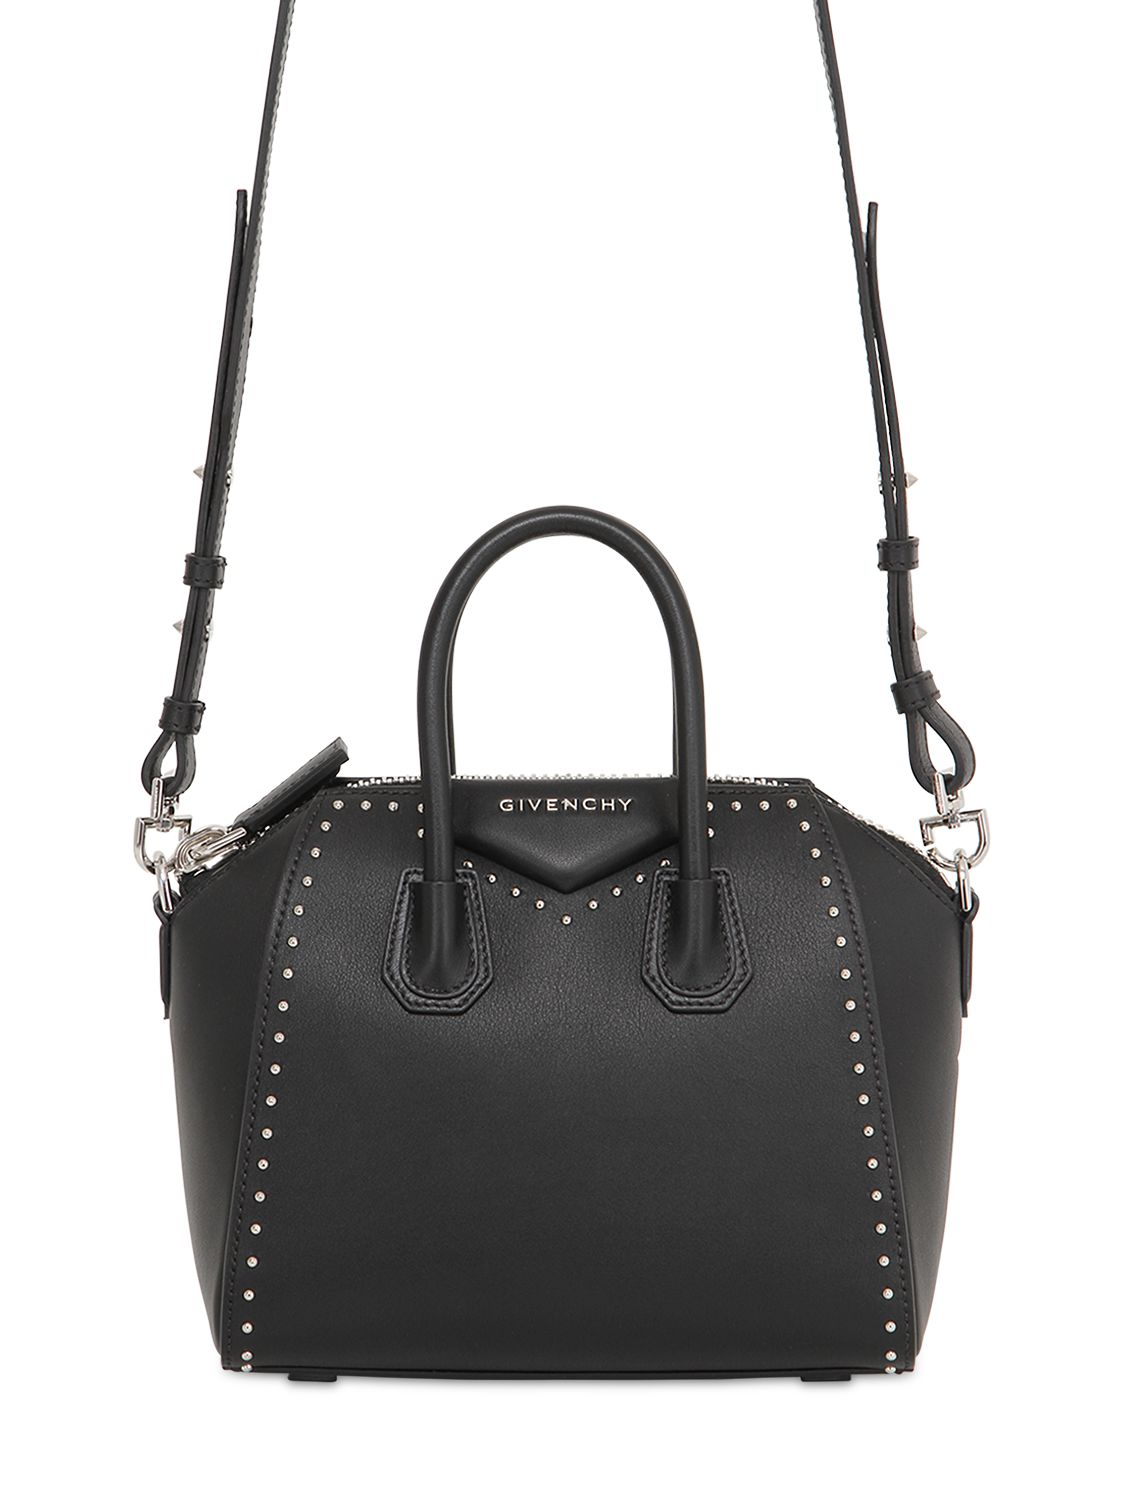 Lyst - Givenchy Mini Antigona Studded Leather Bag in Black